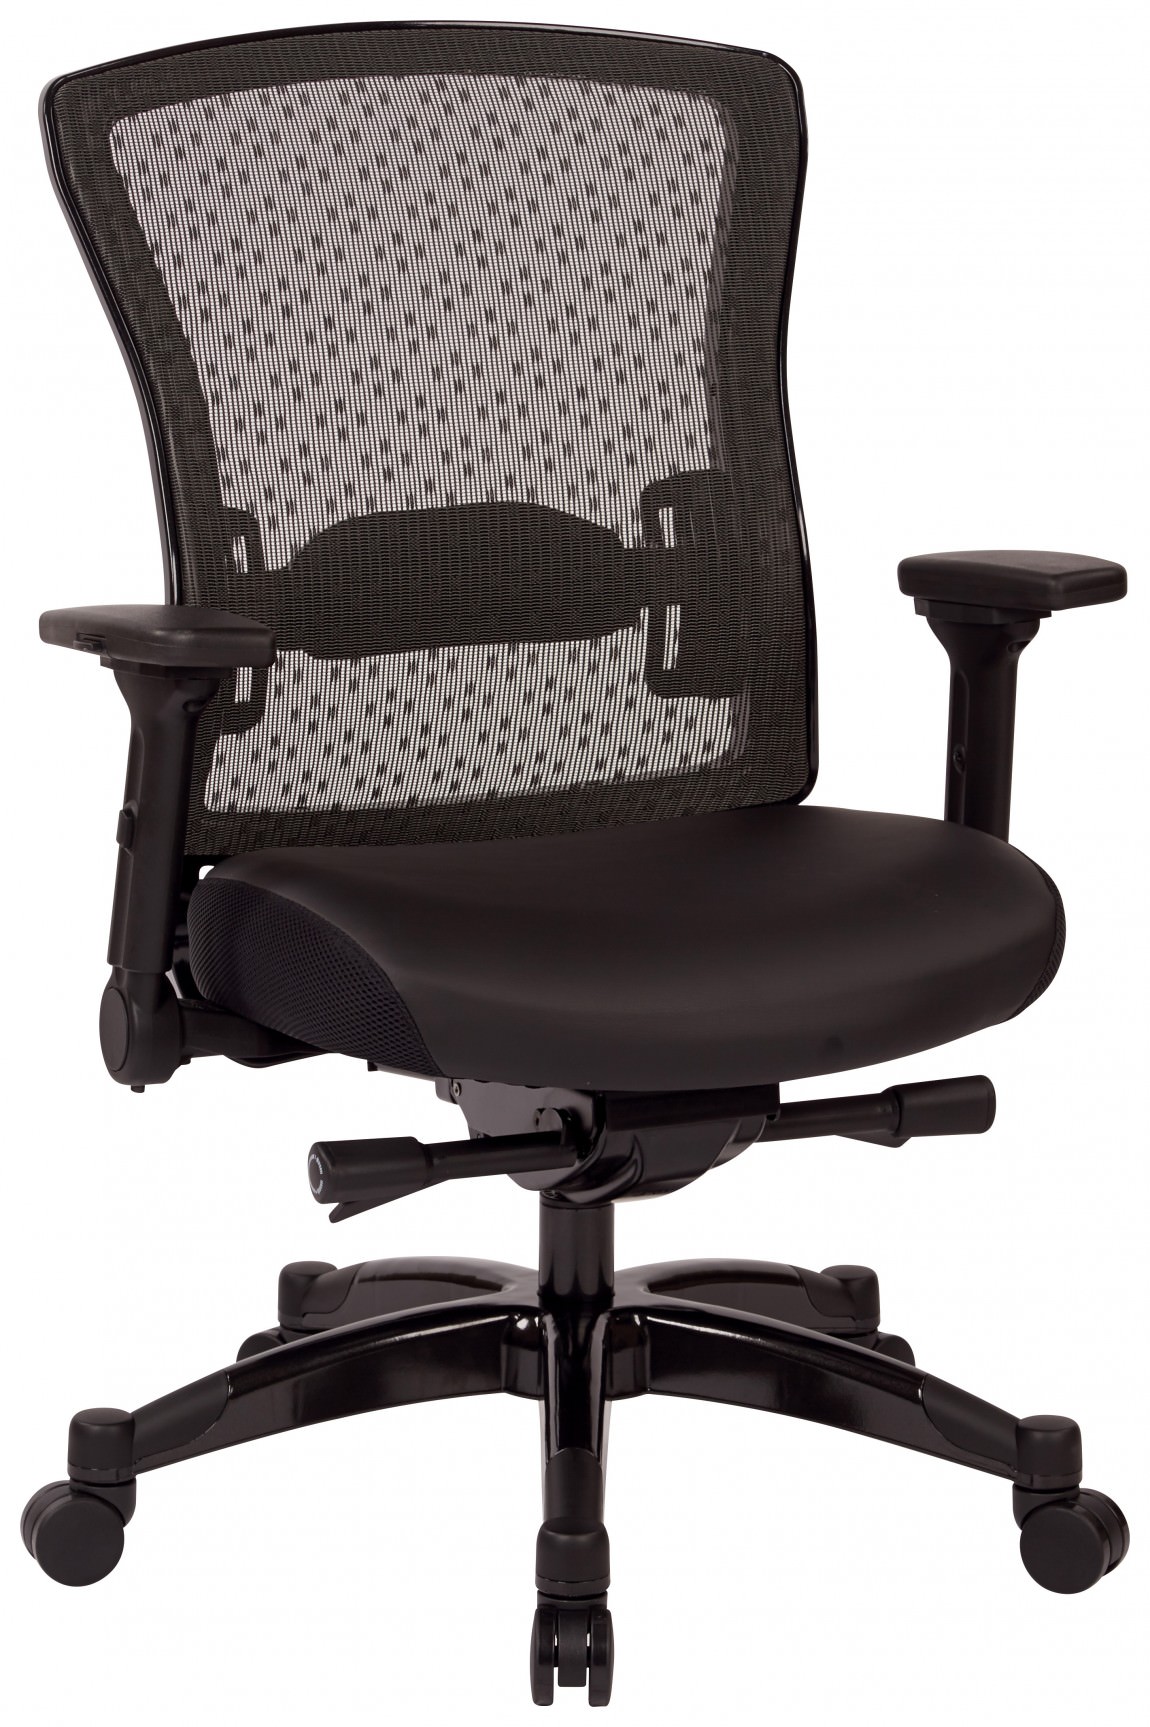 https://madisonliquidators.com/images/p/1150/25290-mesh-back-office-chair-1.jpg